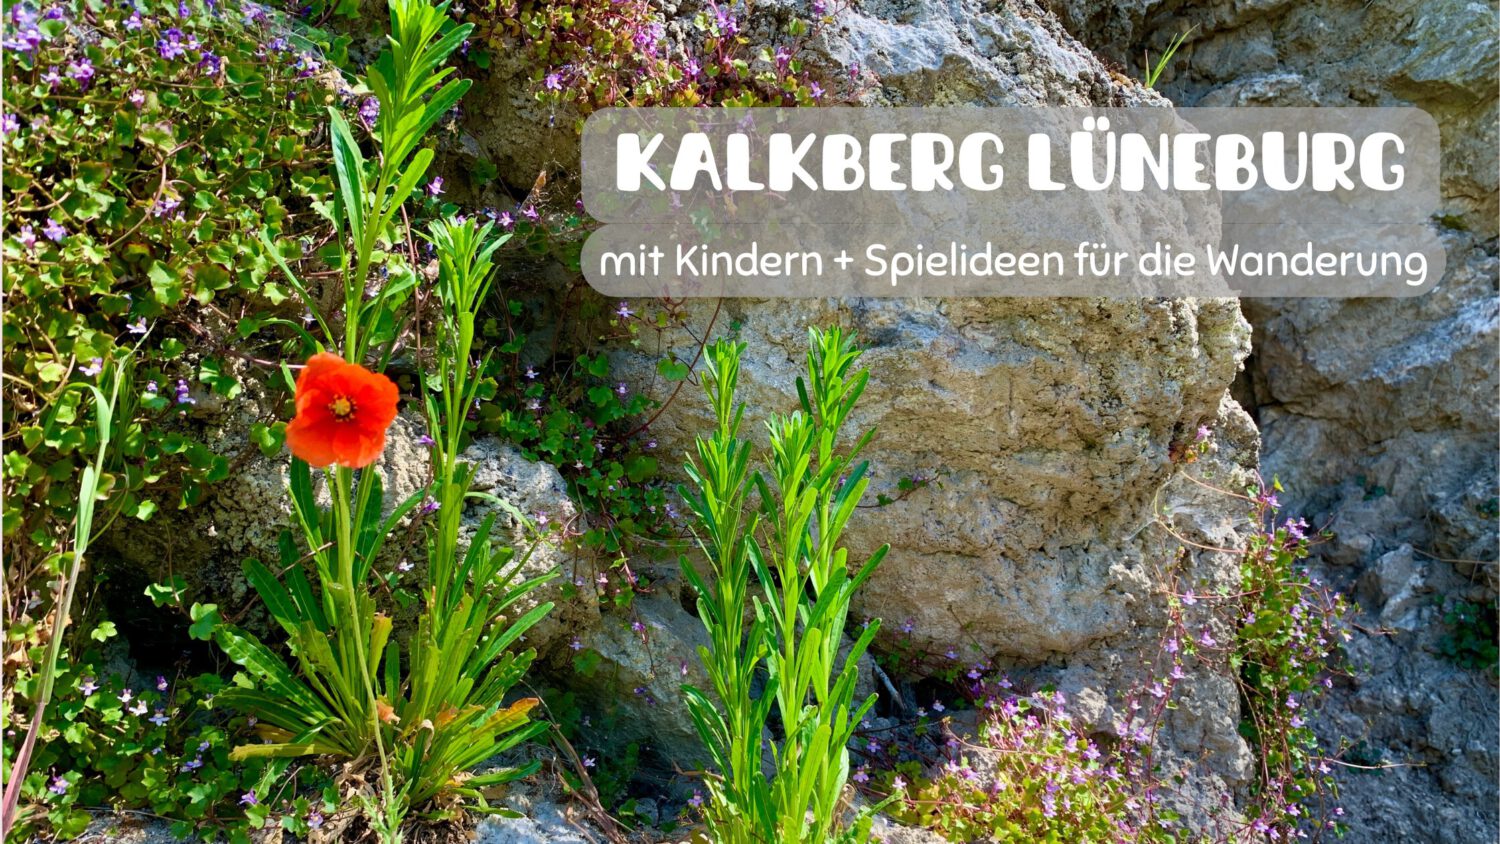 Kalkberg Lüneburg mit Kindern